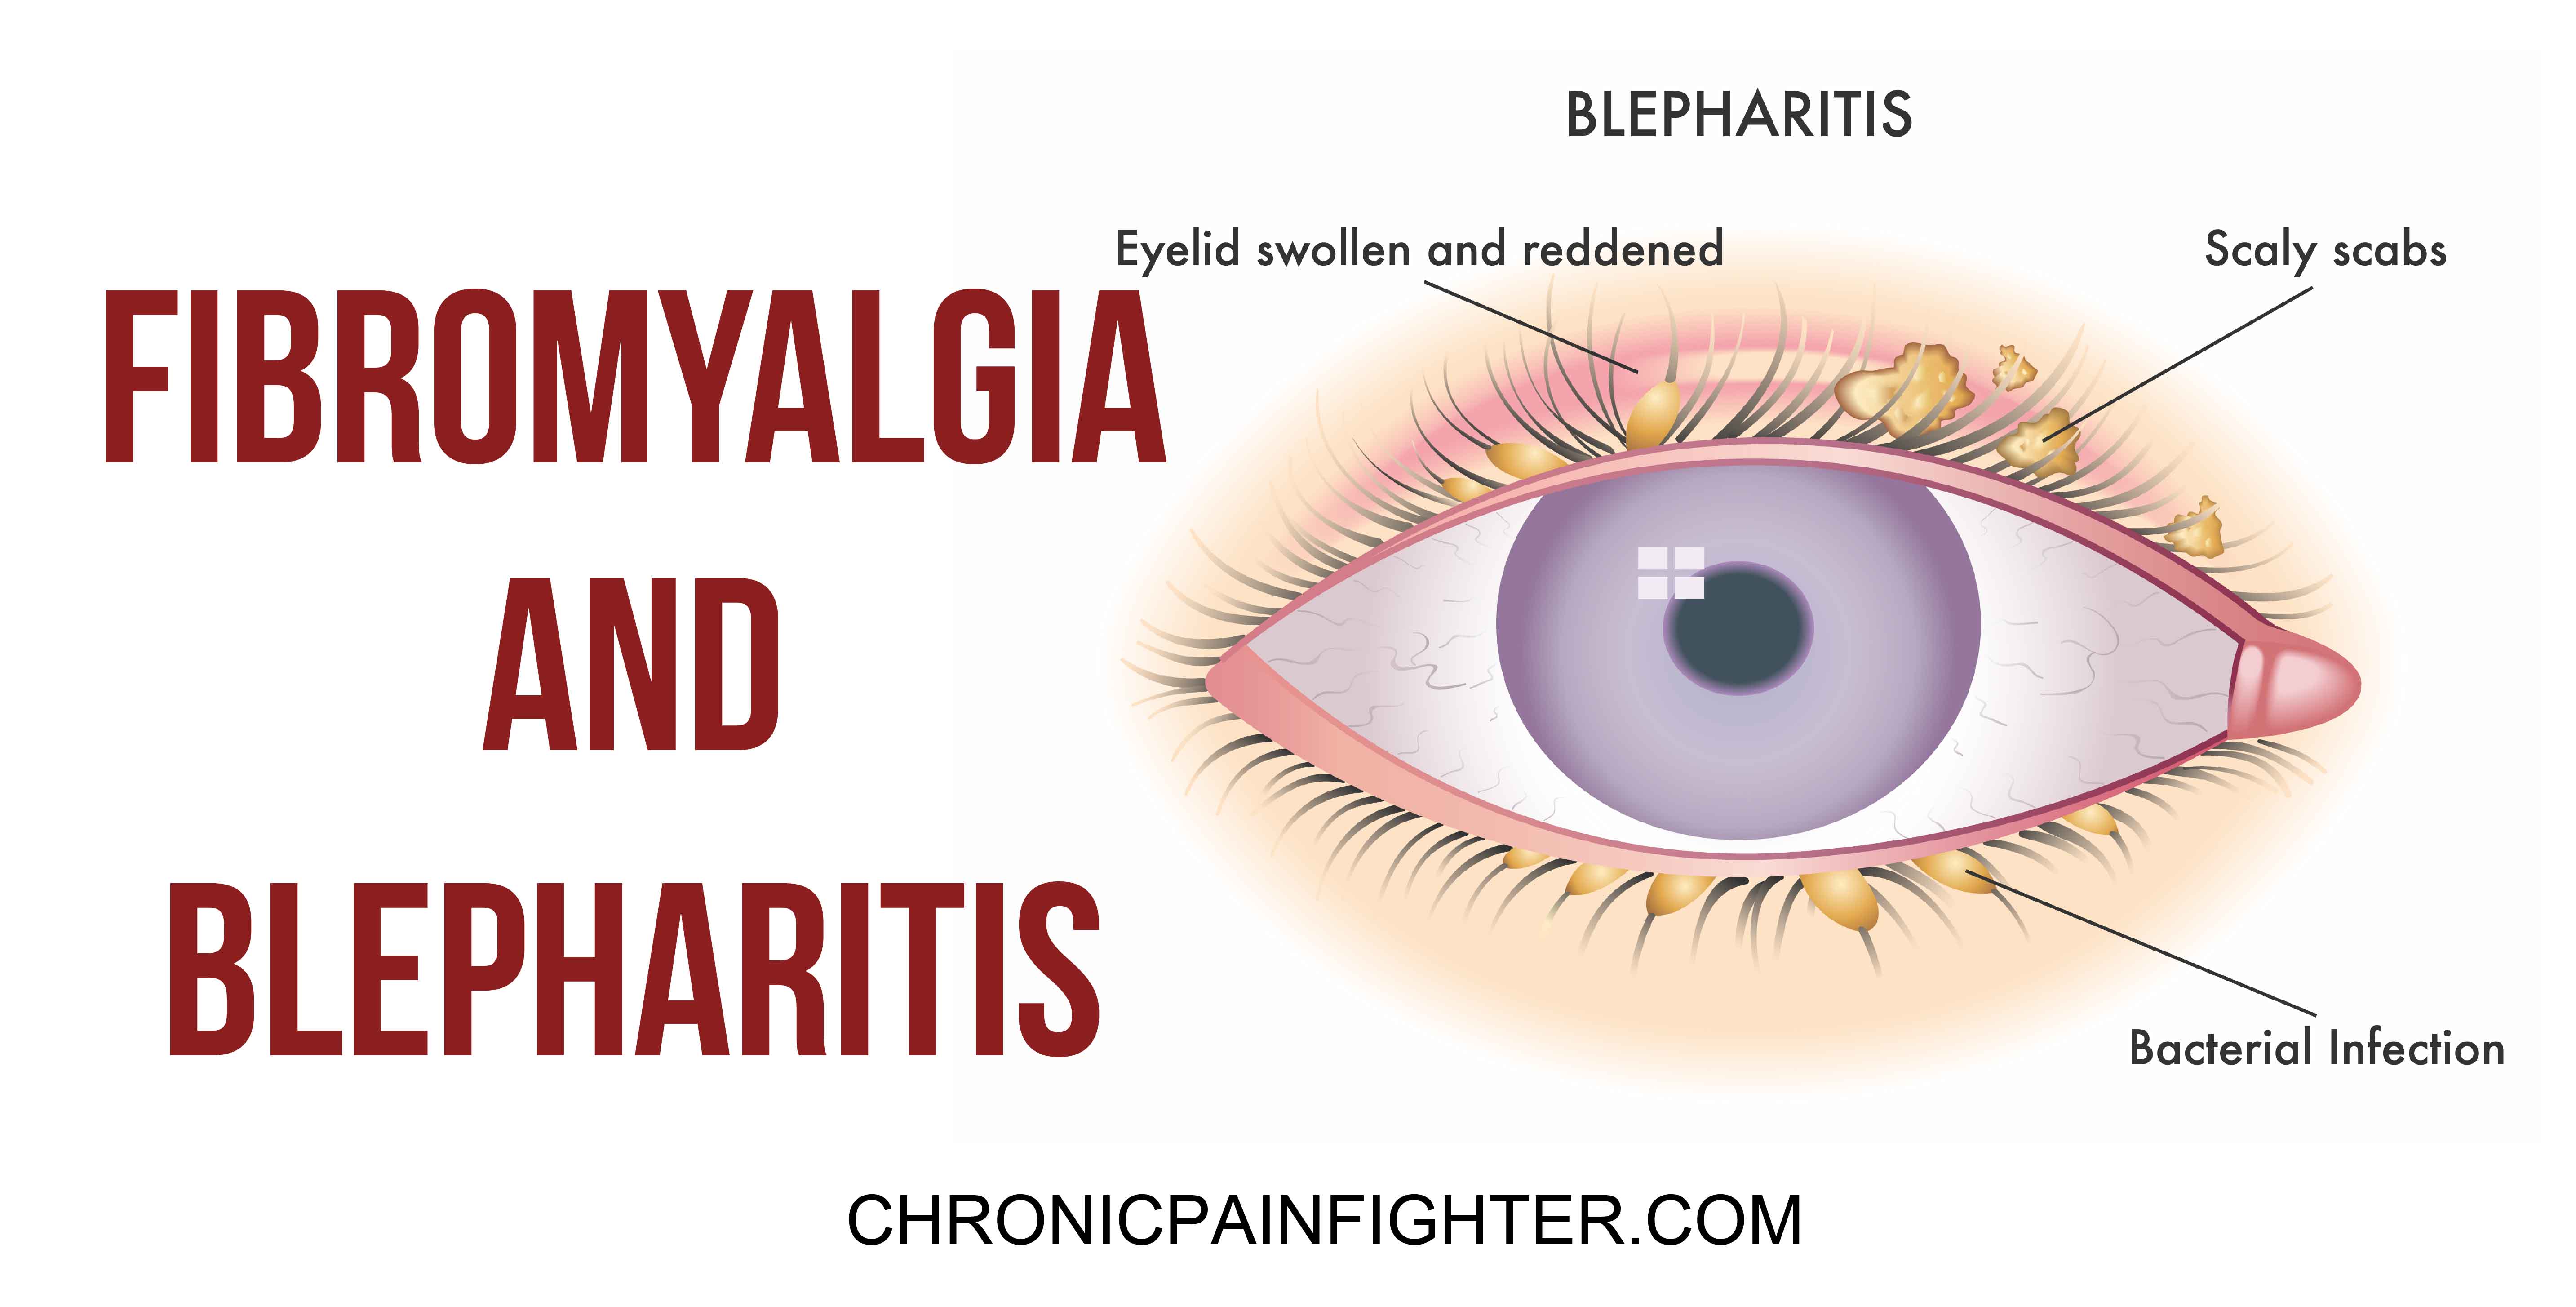 Fibromyalgia and Blepharitis